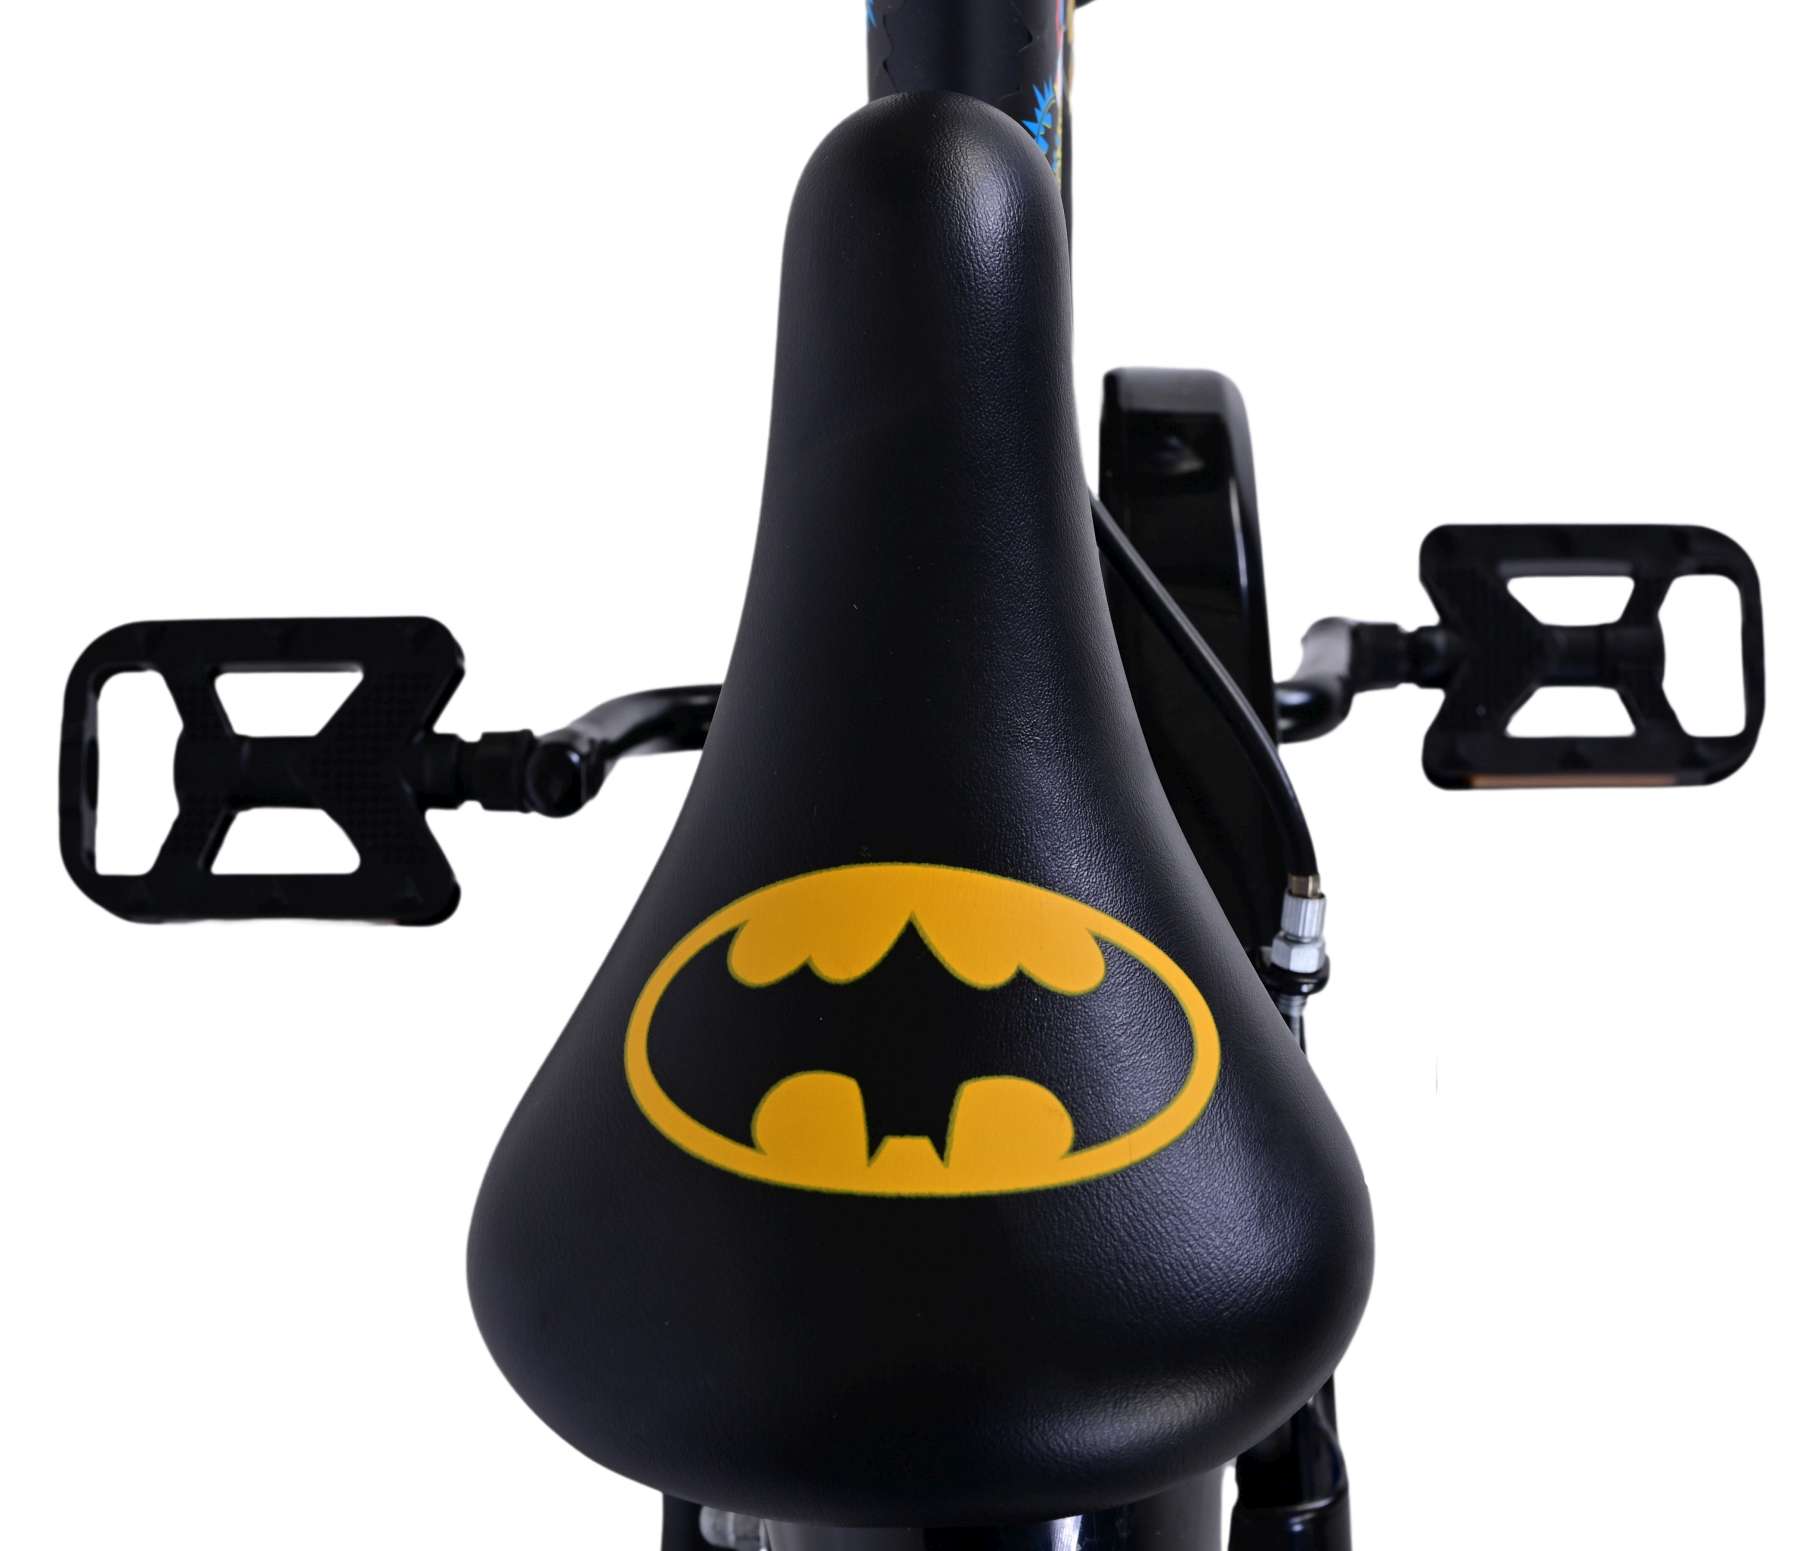 Kinderfahrrad Batman für Jungen 14 Zoll Kinderrad in Schwarz Fahrrad